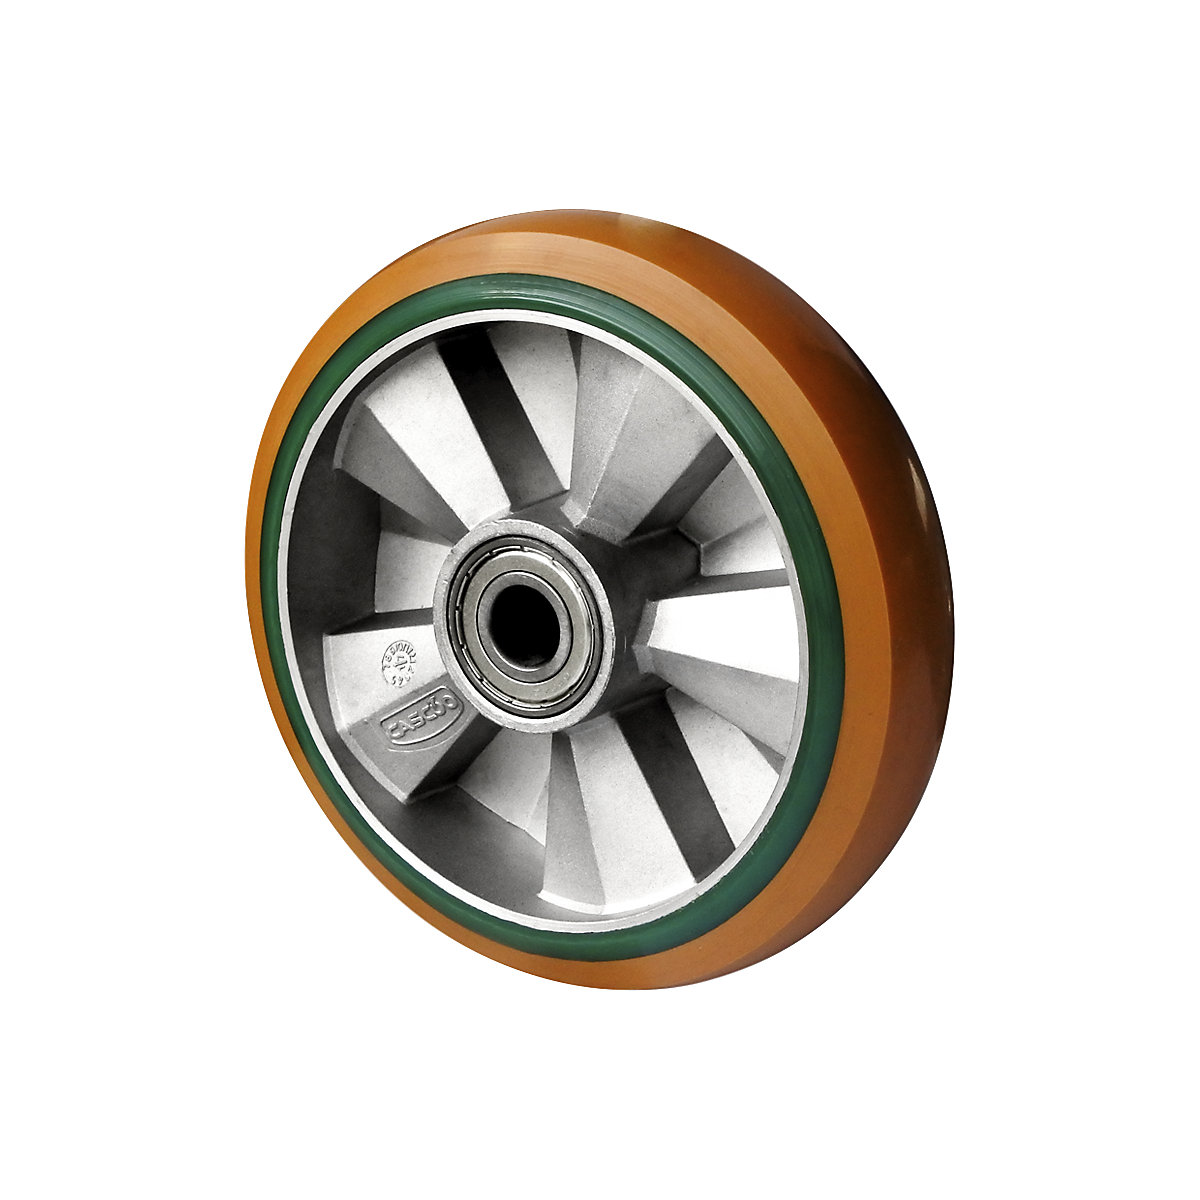 PU/PU elastic wheel, brown / green, double ball bearing, 2+ items, wheel Ø x width 200 x 50 mm-1